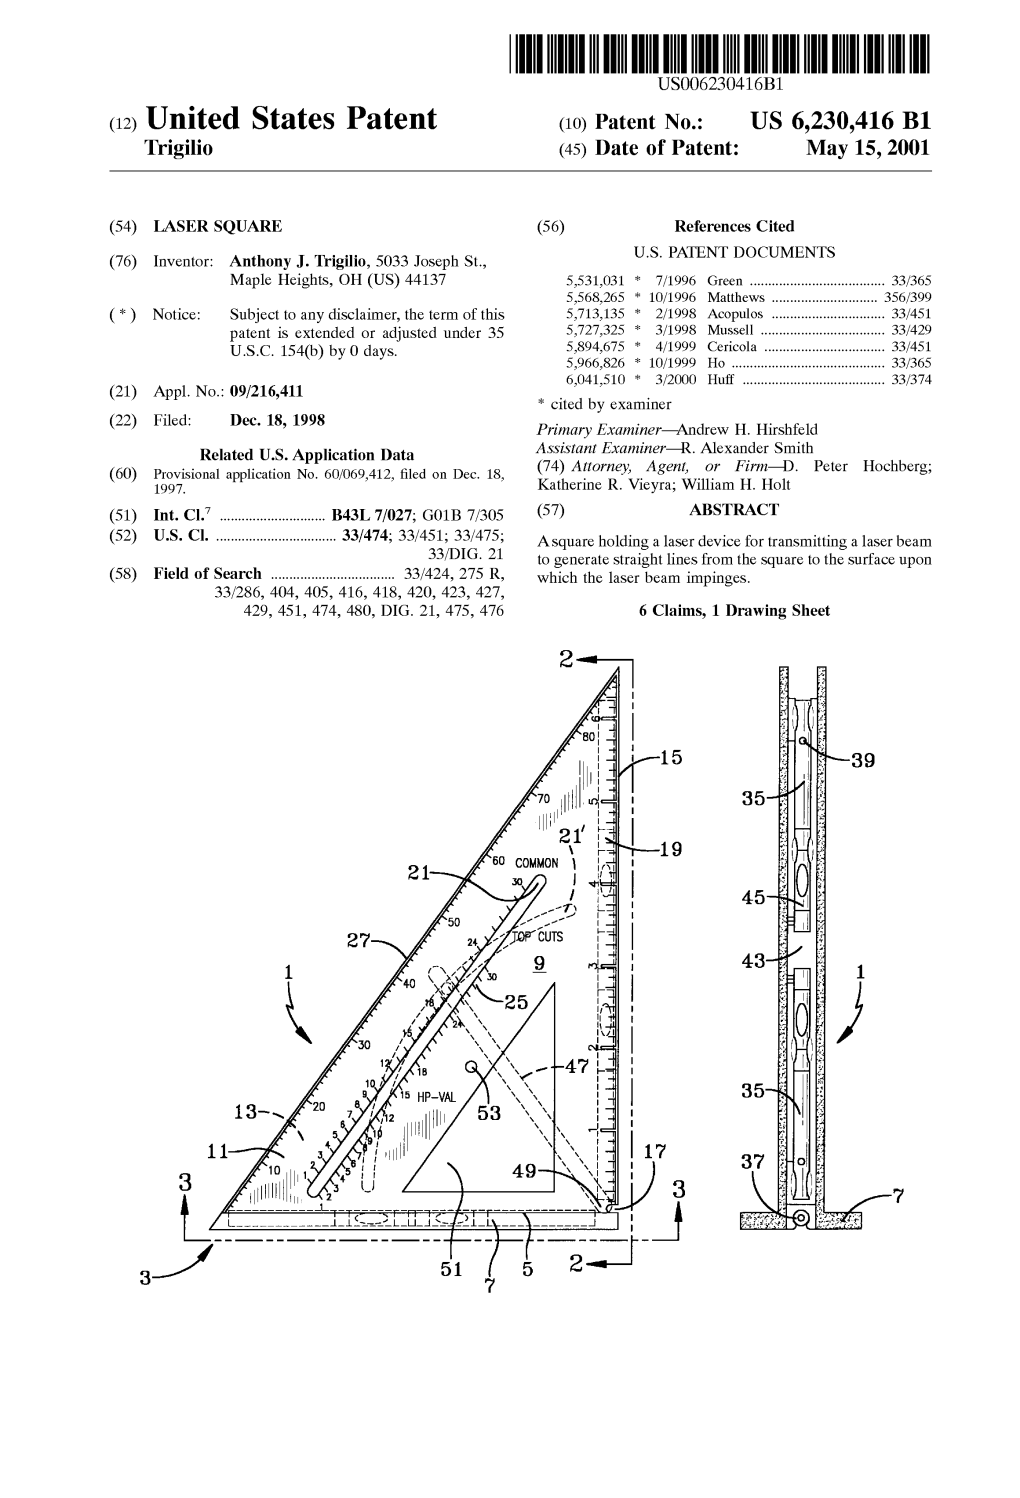 (12) United States Patent (16) Patent N6.= US 6,230,416 B1 Trigilio (45) Date of Patent: May 15, 2001